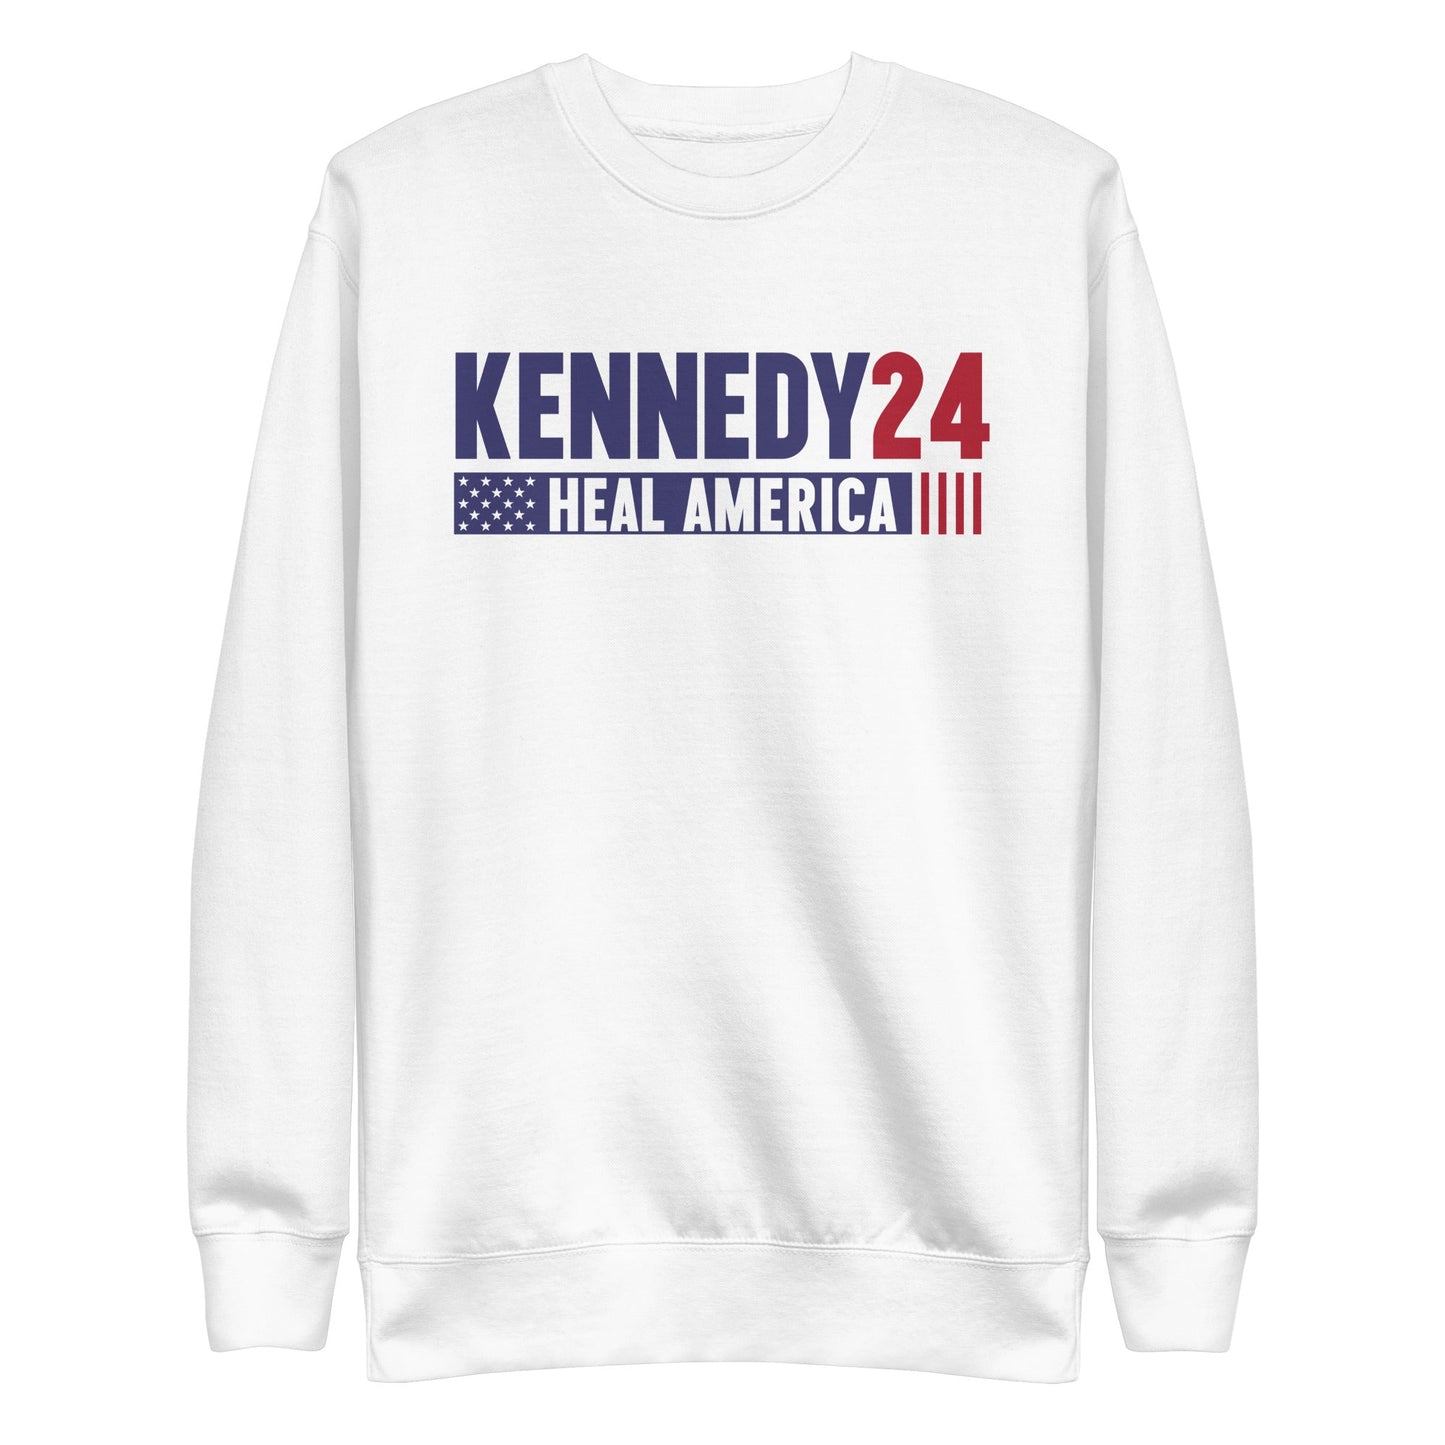 Heal America Unisex Premium Sweatshirt - TEAM KENNEDY. All rights reserved